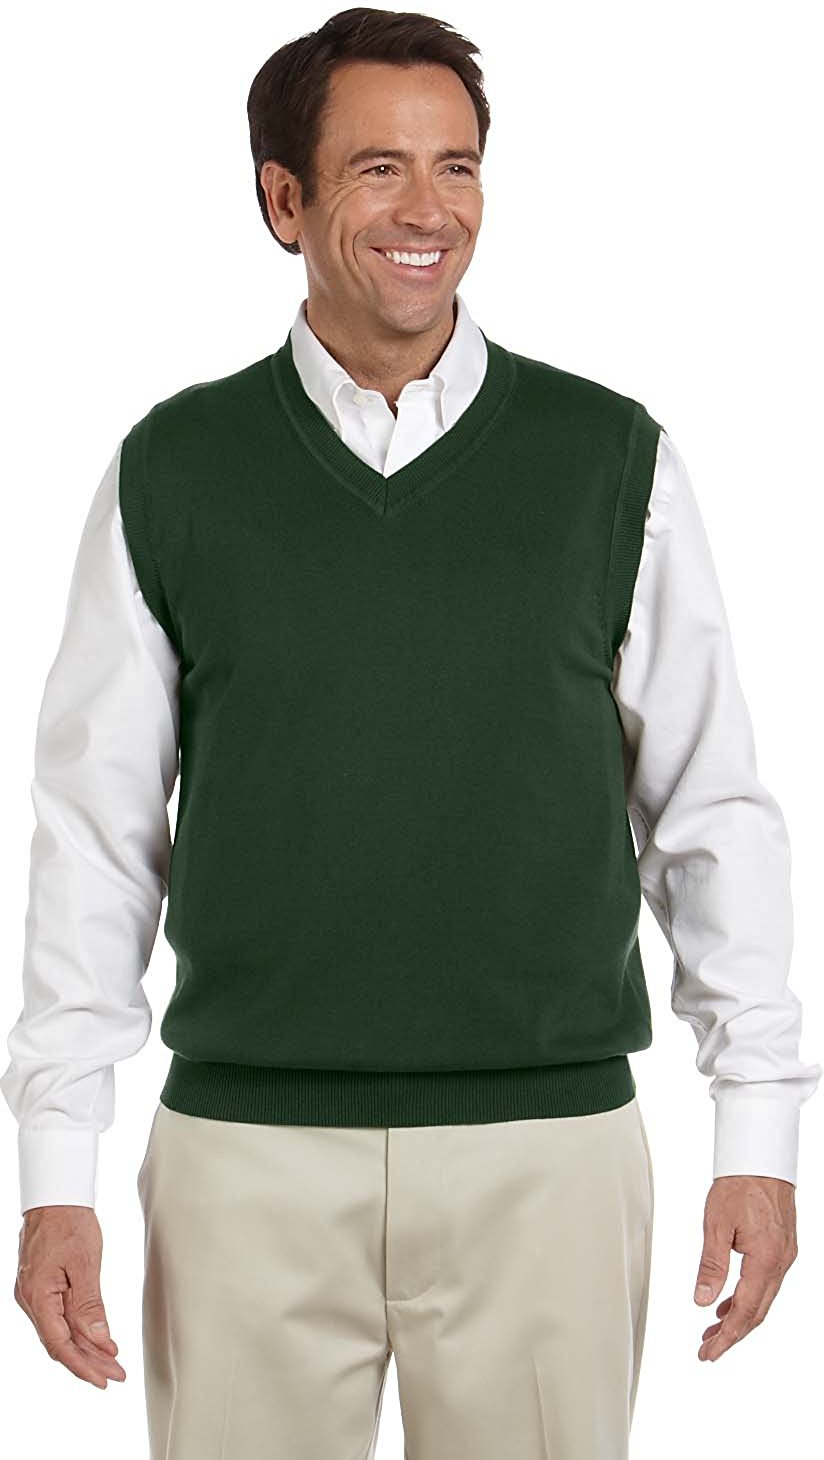 vest for men devon u0026 jones menu0027s v-neck sweater vest at amazon menu0027s clothing store: phmtnuy